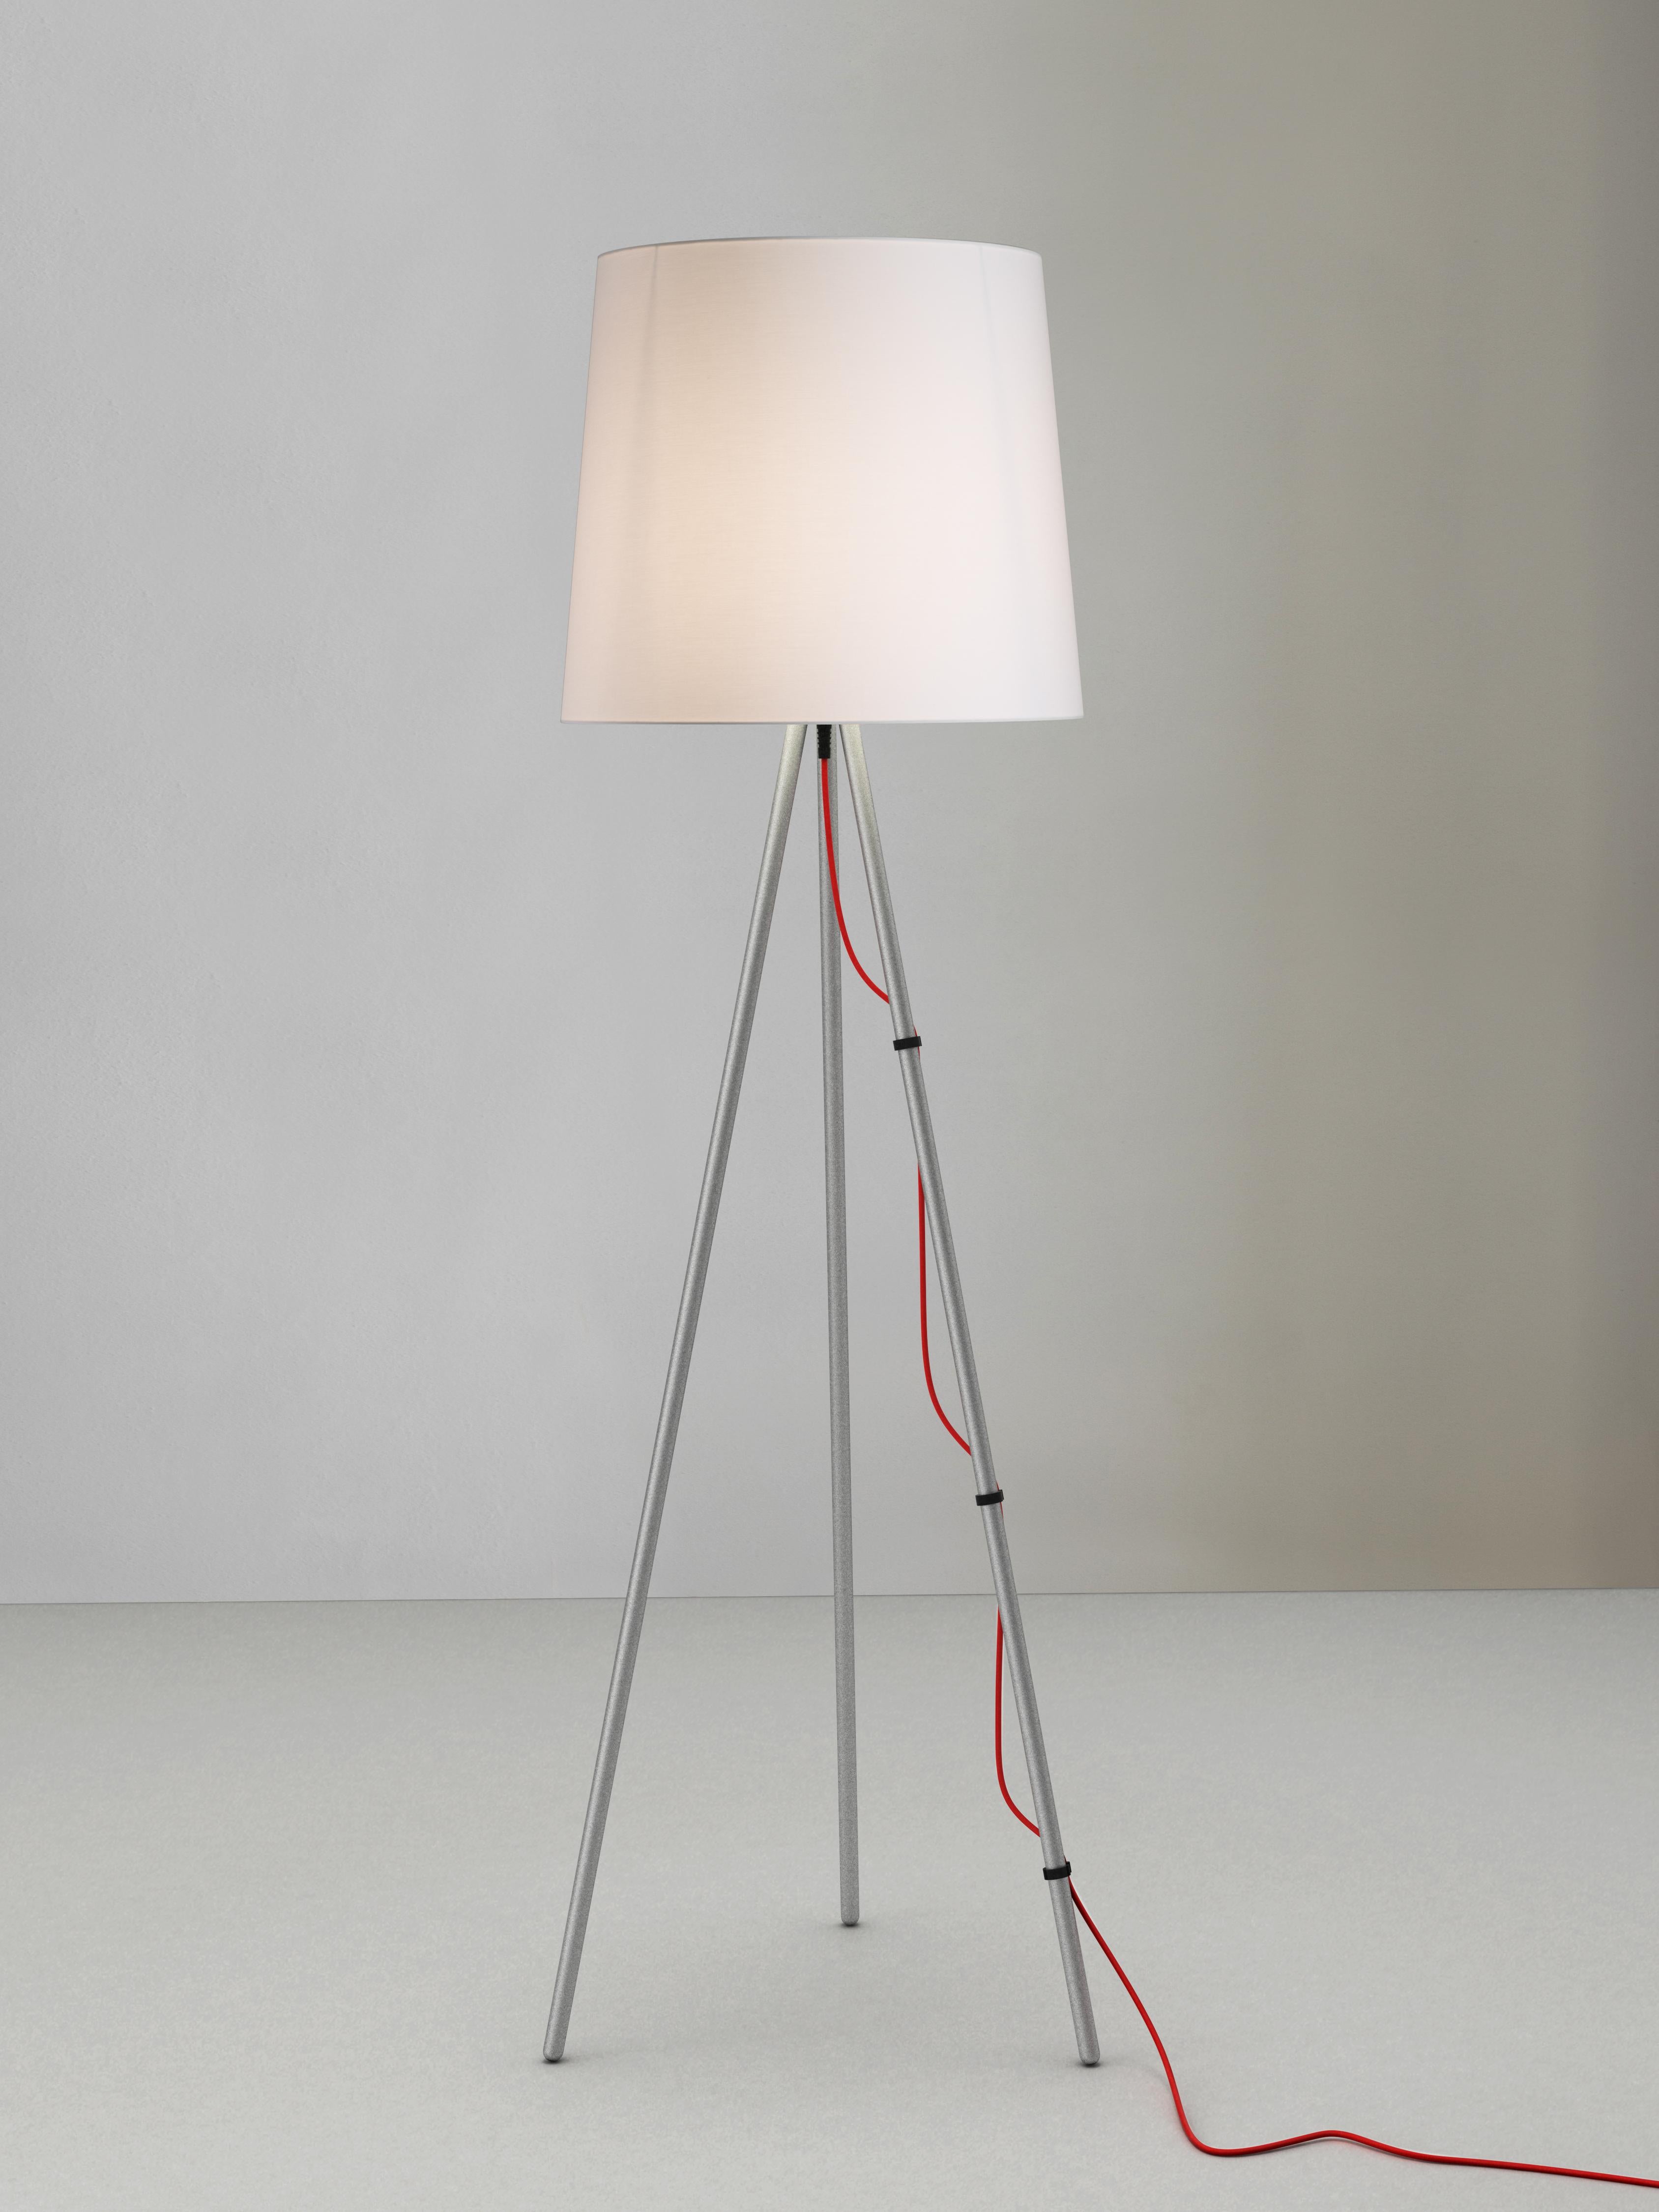 For Sale: White Martinelli Luce Eva 2270 Floor Lamp in Satin Aluminum Body 2